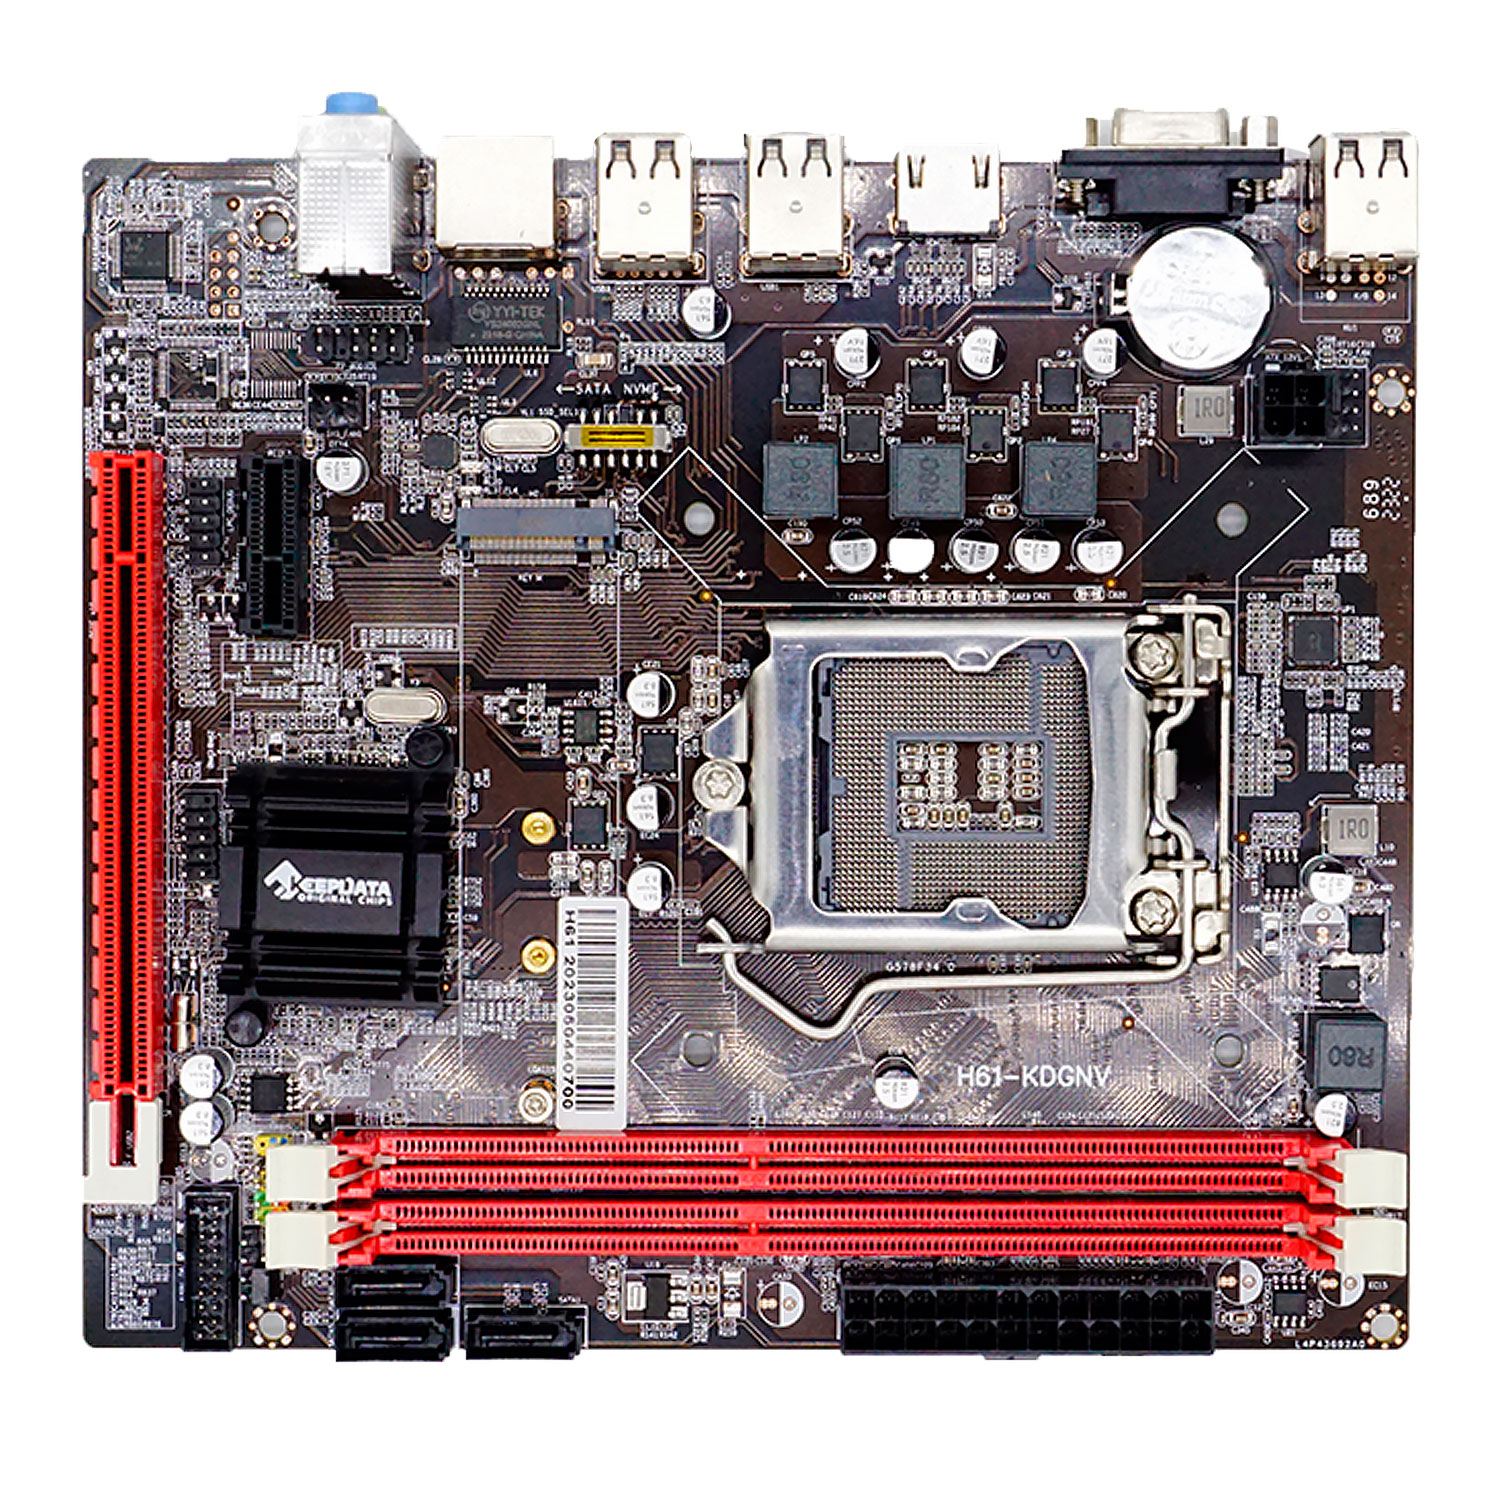 Placa Mãe KeepData H61-KDGNV DDR3 Socket LGA1155 Chipset Intel H61 Express Micro ATX